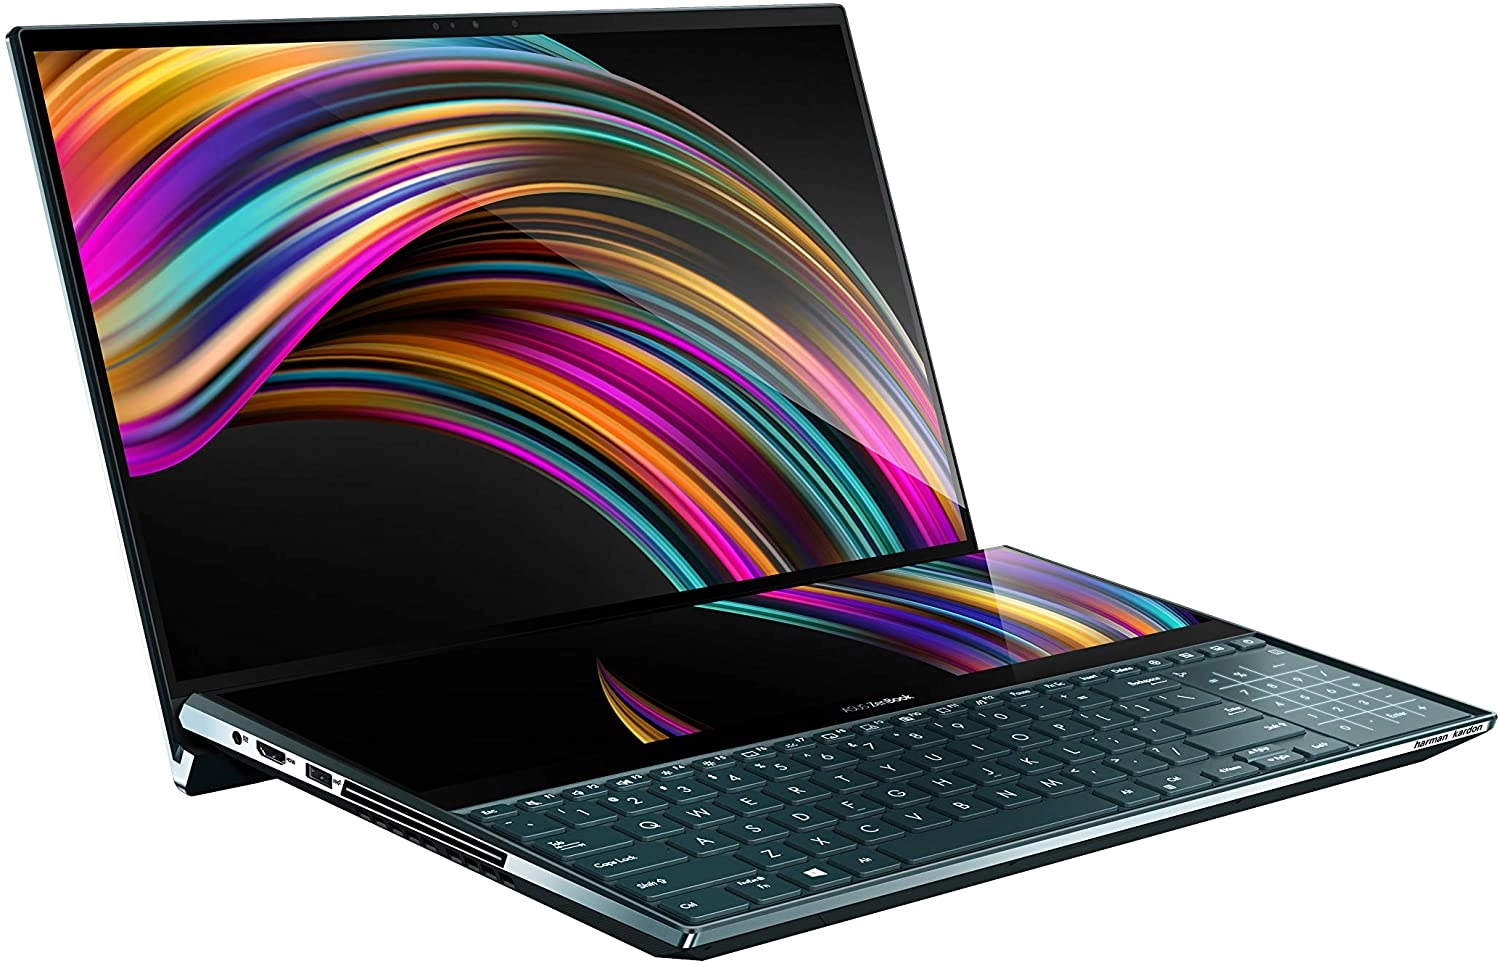 Asus ZenBook Pro Duo 15 laptop image